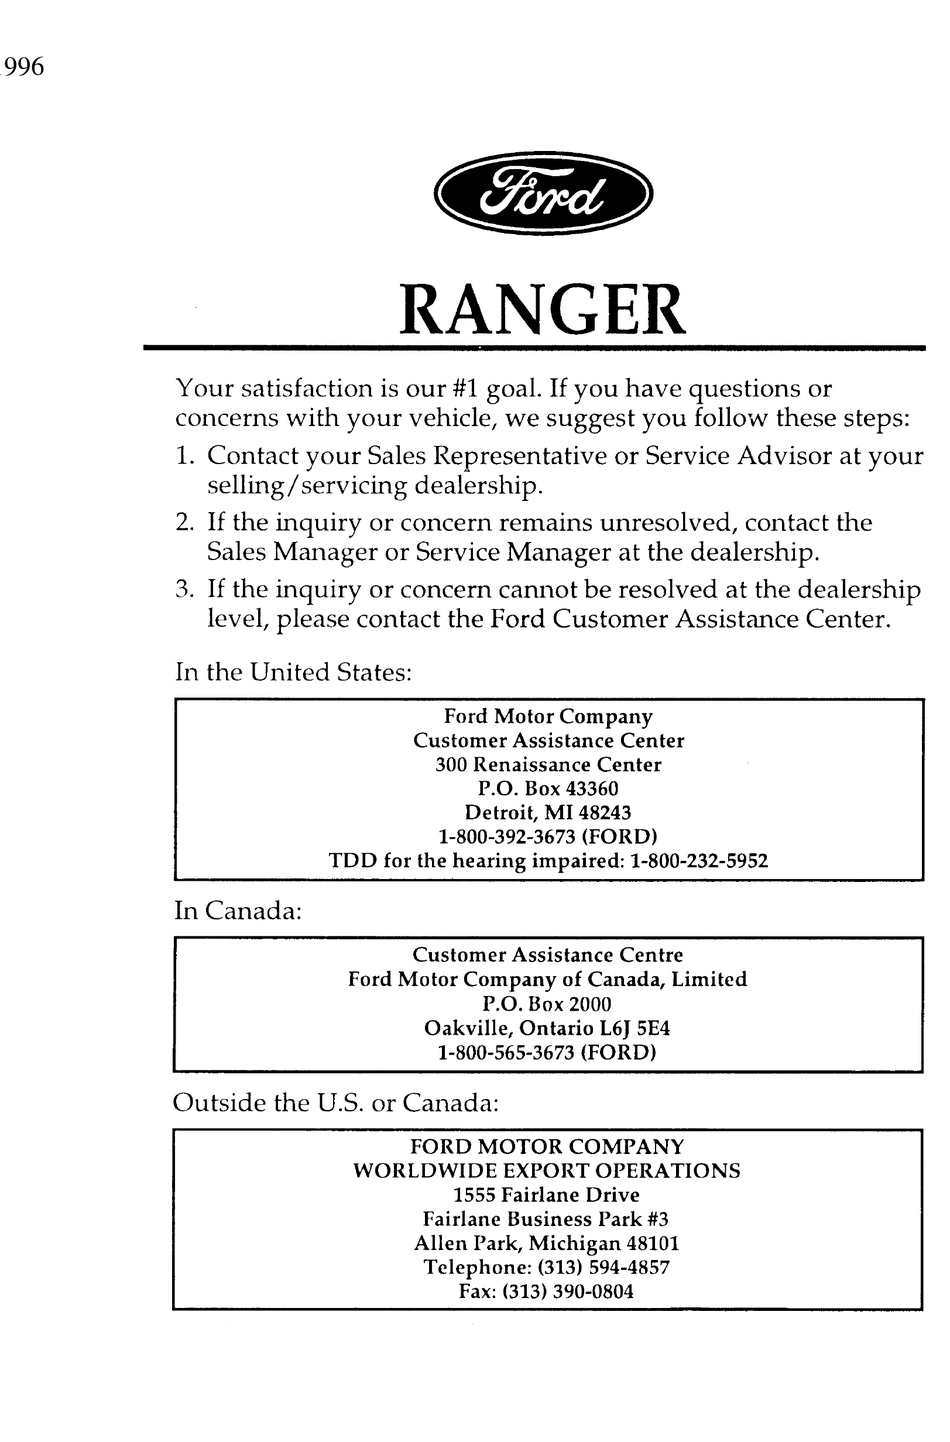 RANGER OWNERS MANUAL FORD 1995 PICKUP TRUCK OWNER GUIDE HANDBOOK 